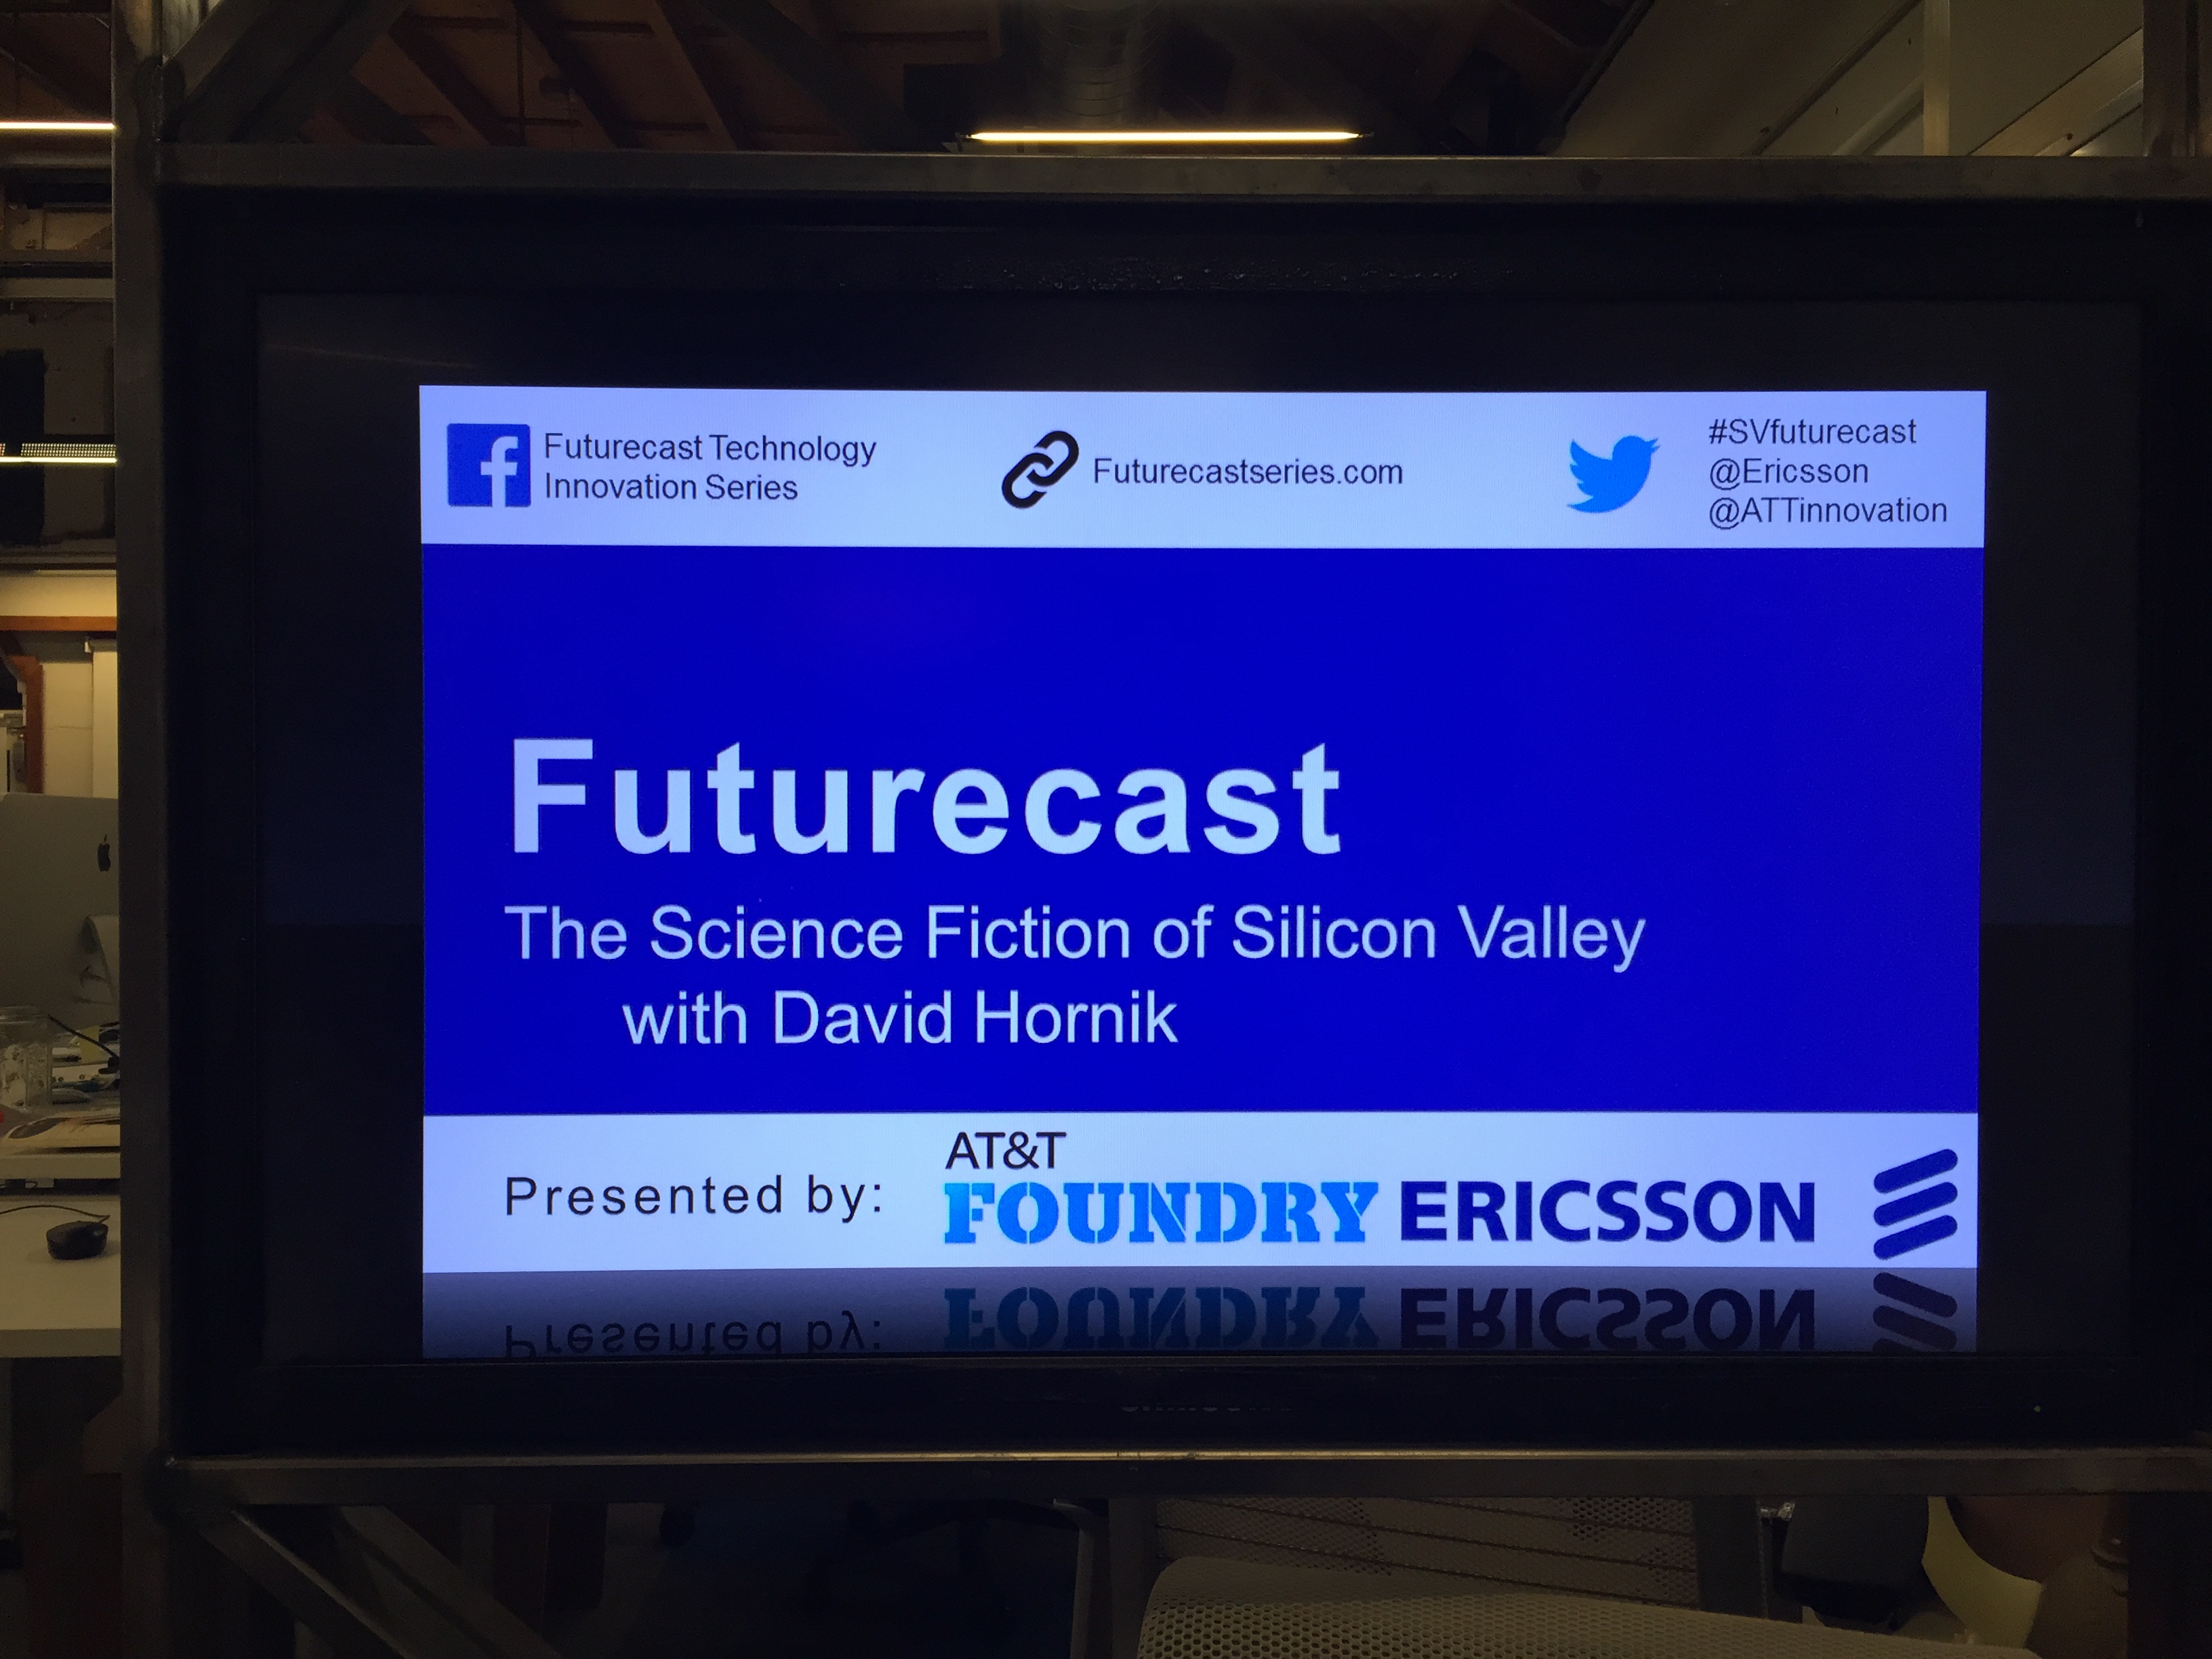 Futurecast old digital poster before rebranding